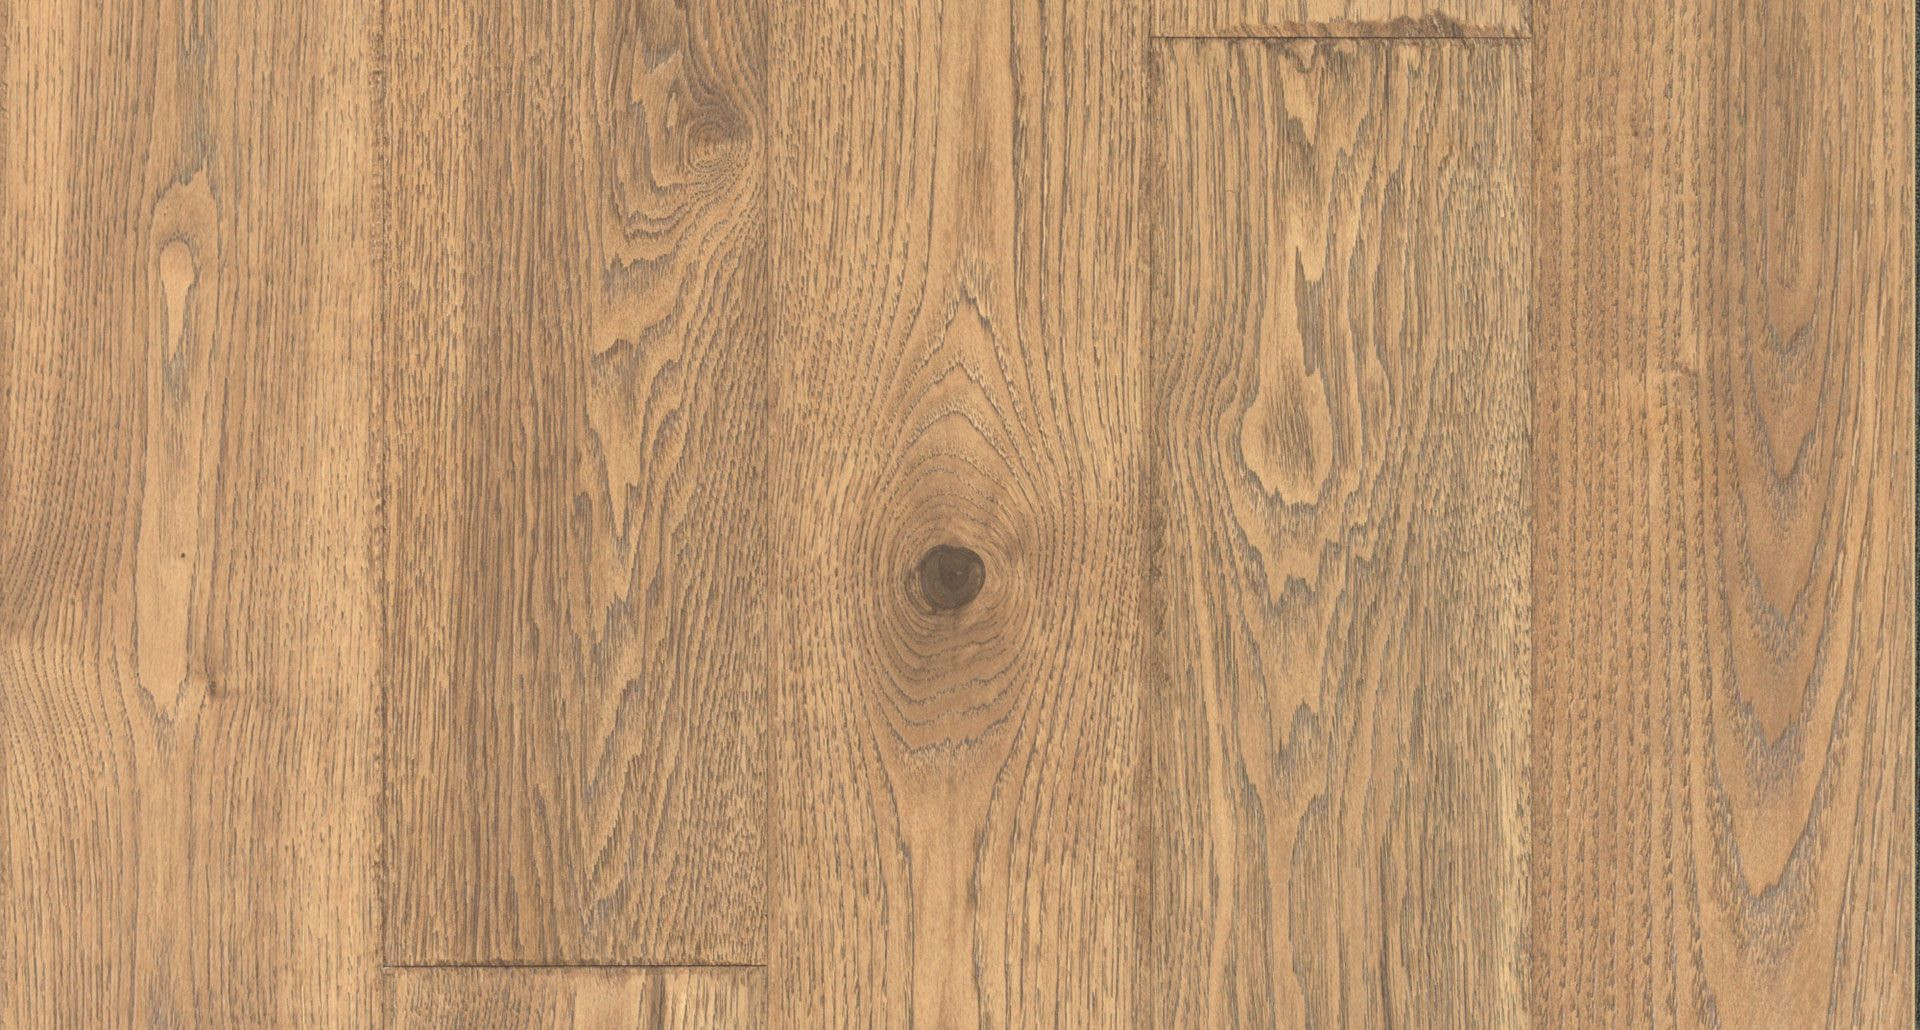 hardwood floor tile lowes of brier creek oak pergoa timbercraft wetprotect laminate flooring 2 99 intended for brier creek oak pergoa timbercraft wetprotect laminate flooring 2 99 sqft at lowes